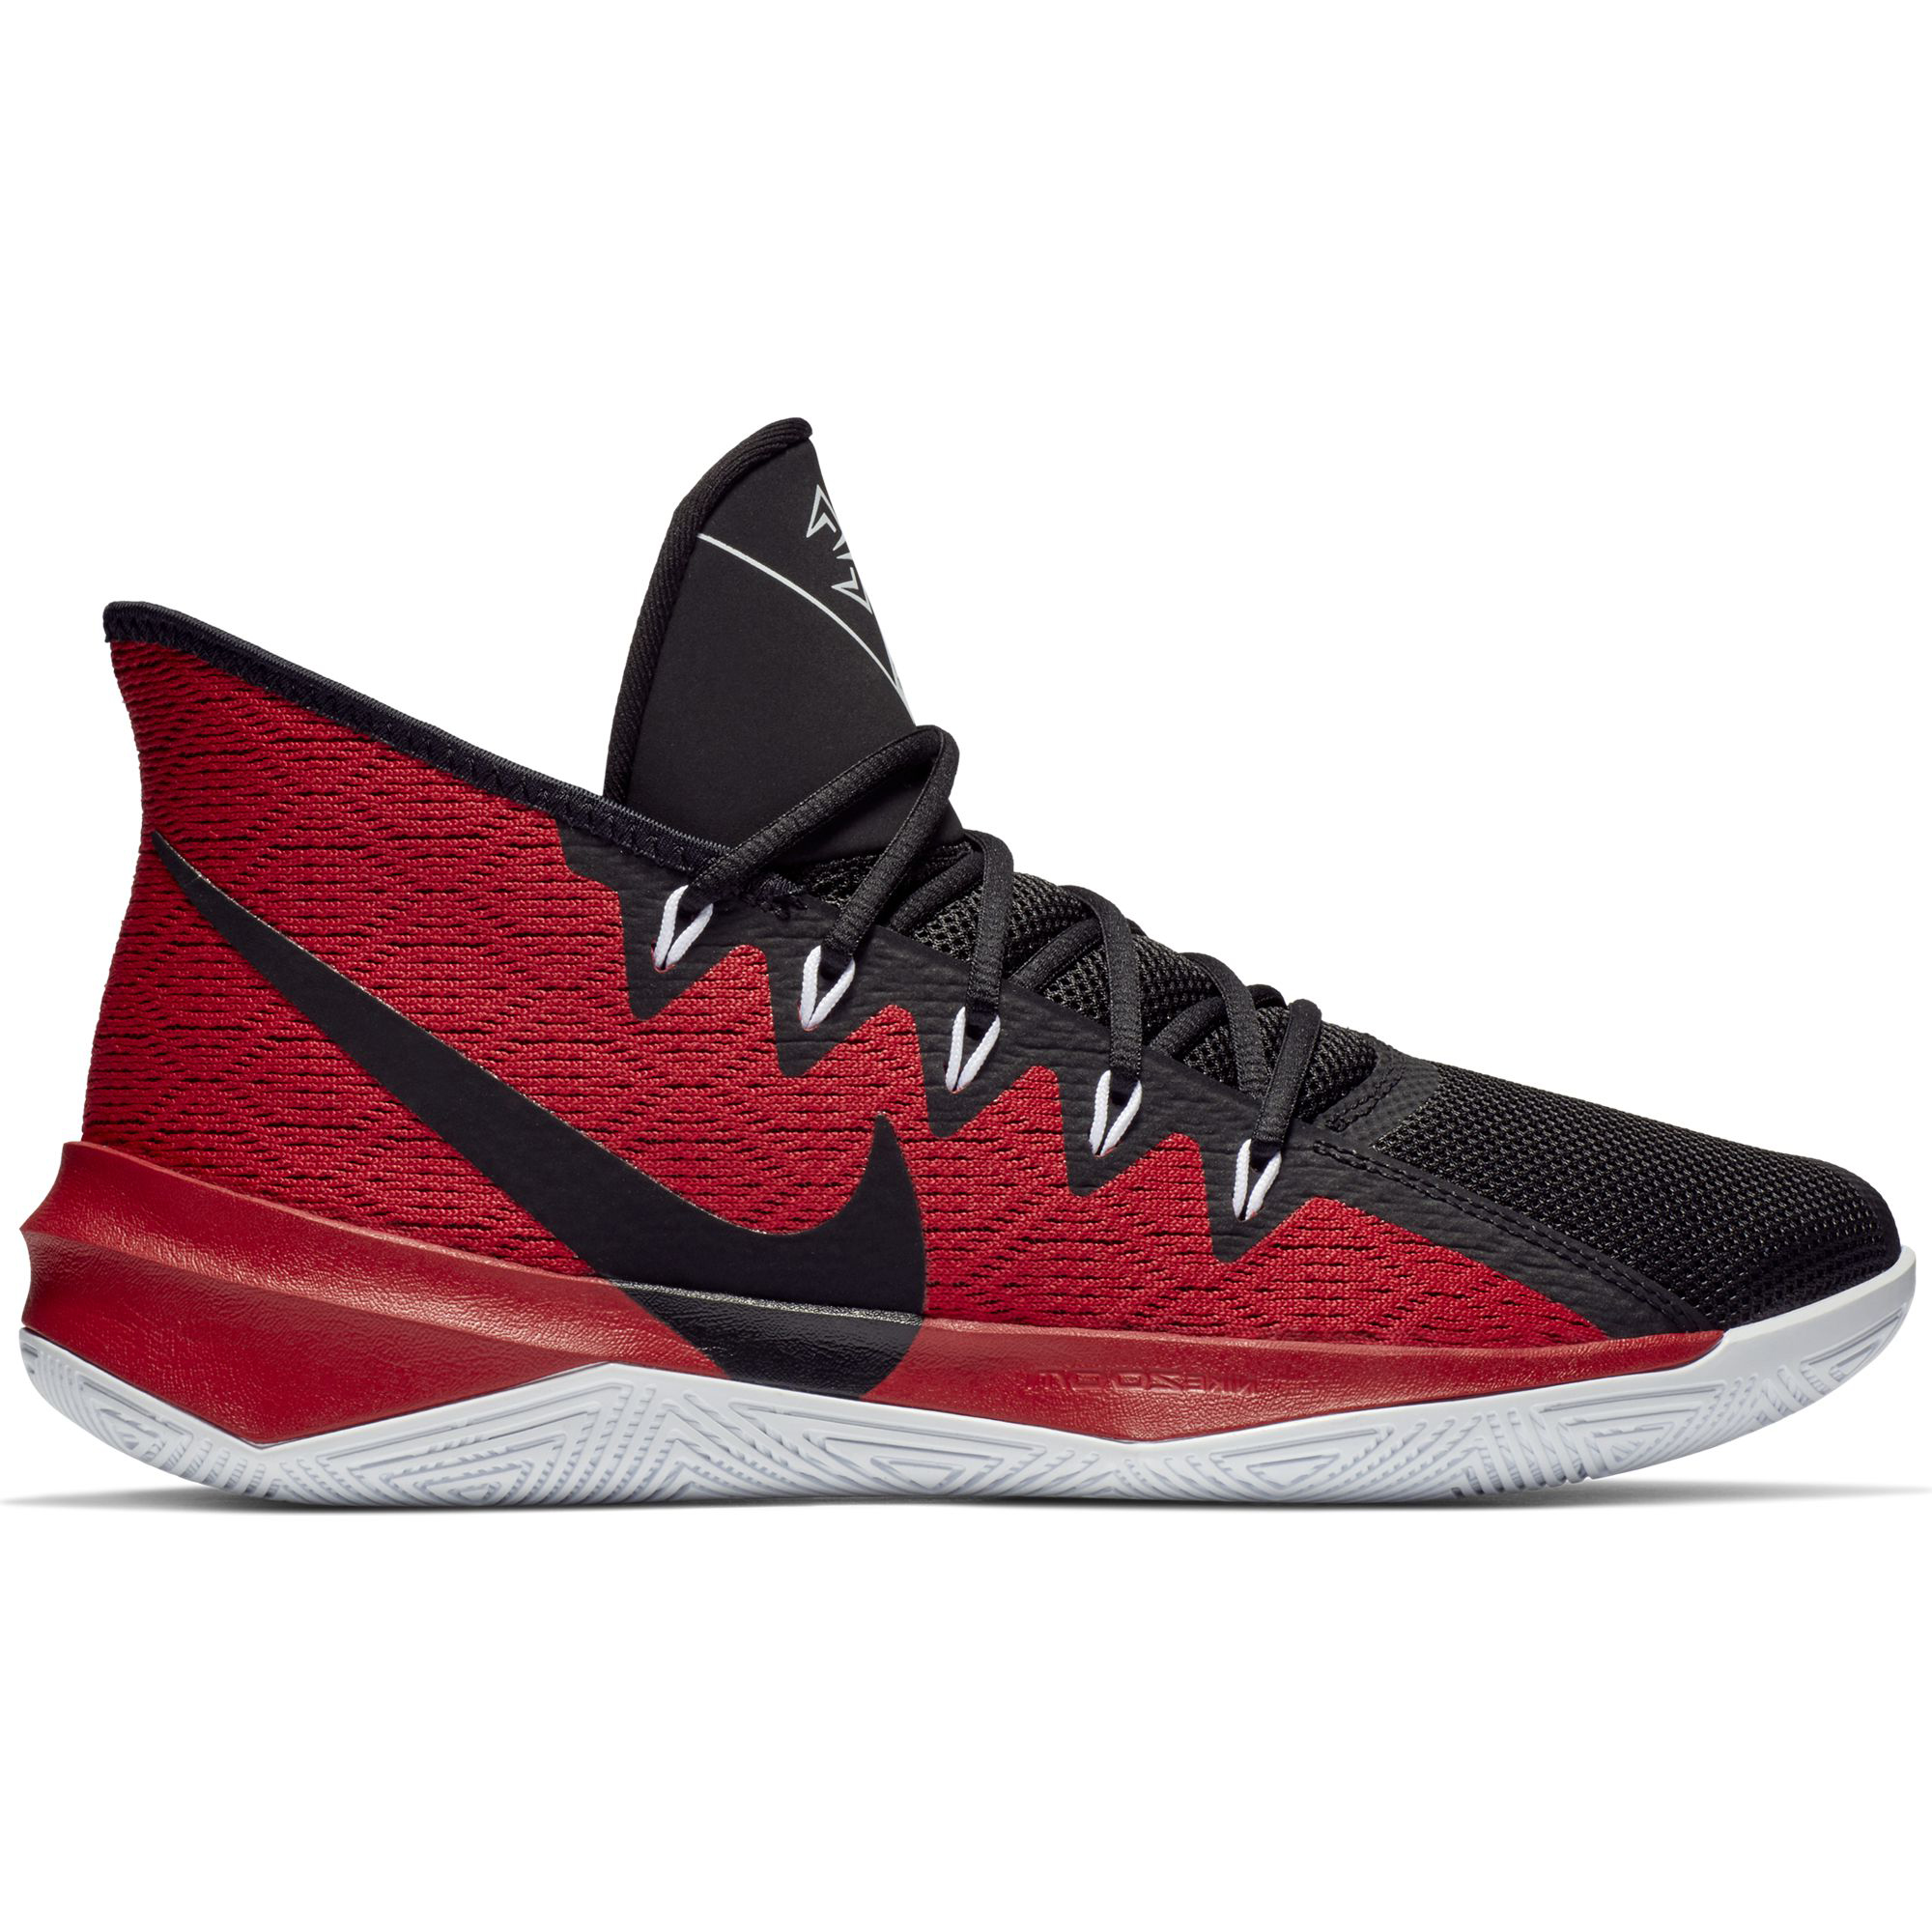 Баскетбольные кроссовки Nike Zoom Evidence III - картинка